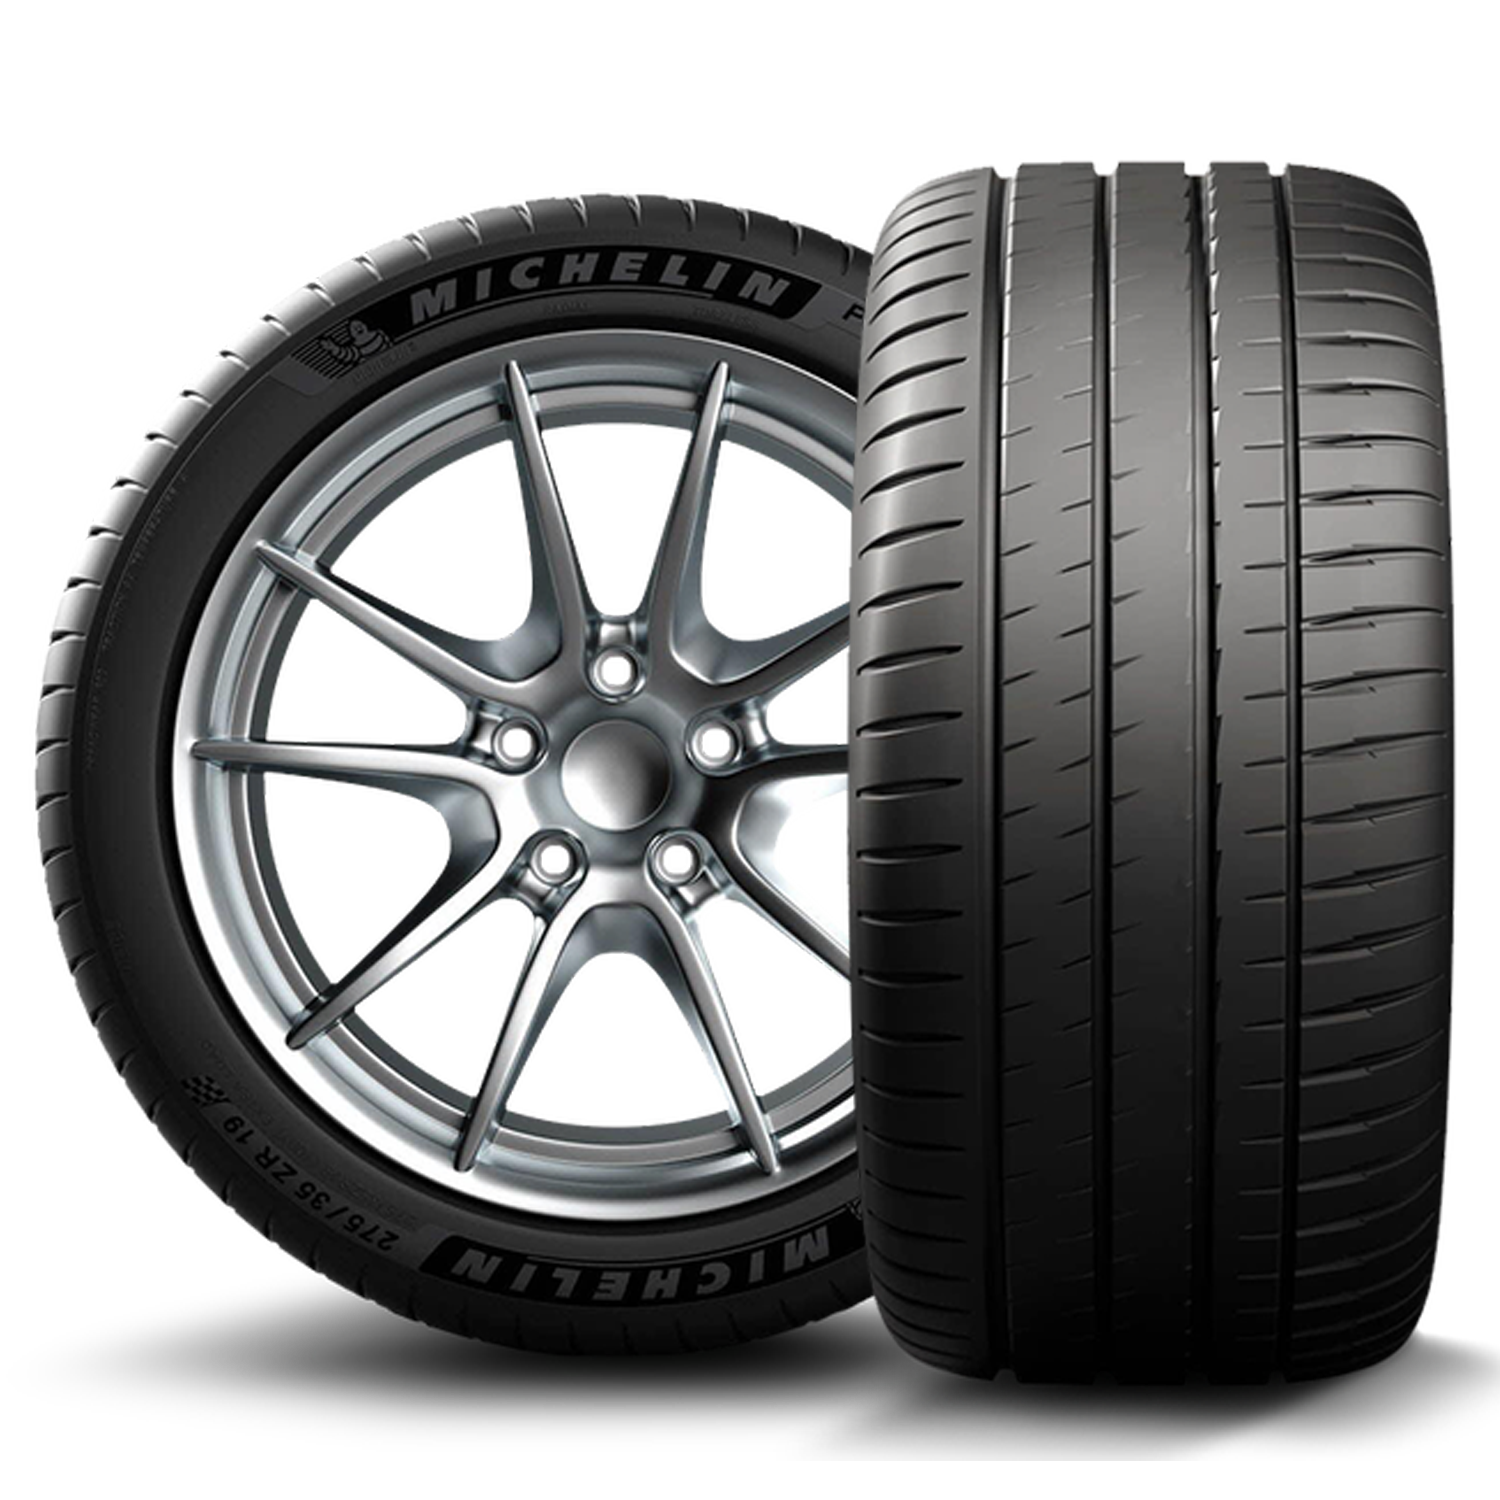 Michelin Pilot Sport 4S Performance 255/35ZR18 (94Y) XL Passenger Tire - image 2 of 5